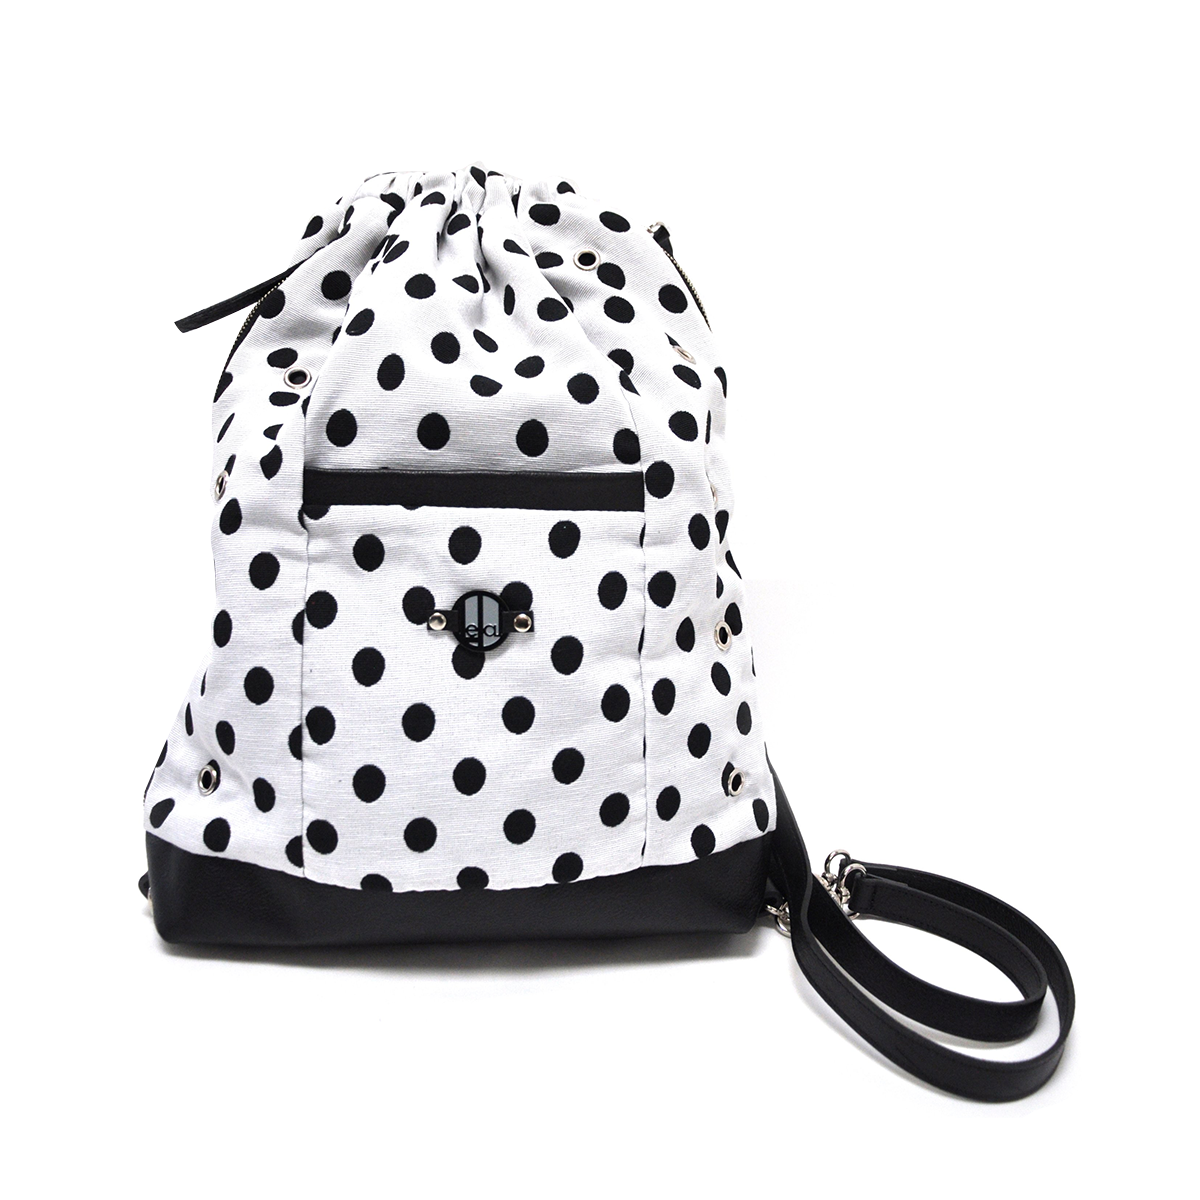 White with Black Polka Dots LeDal Bag